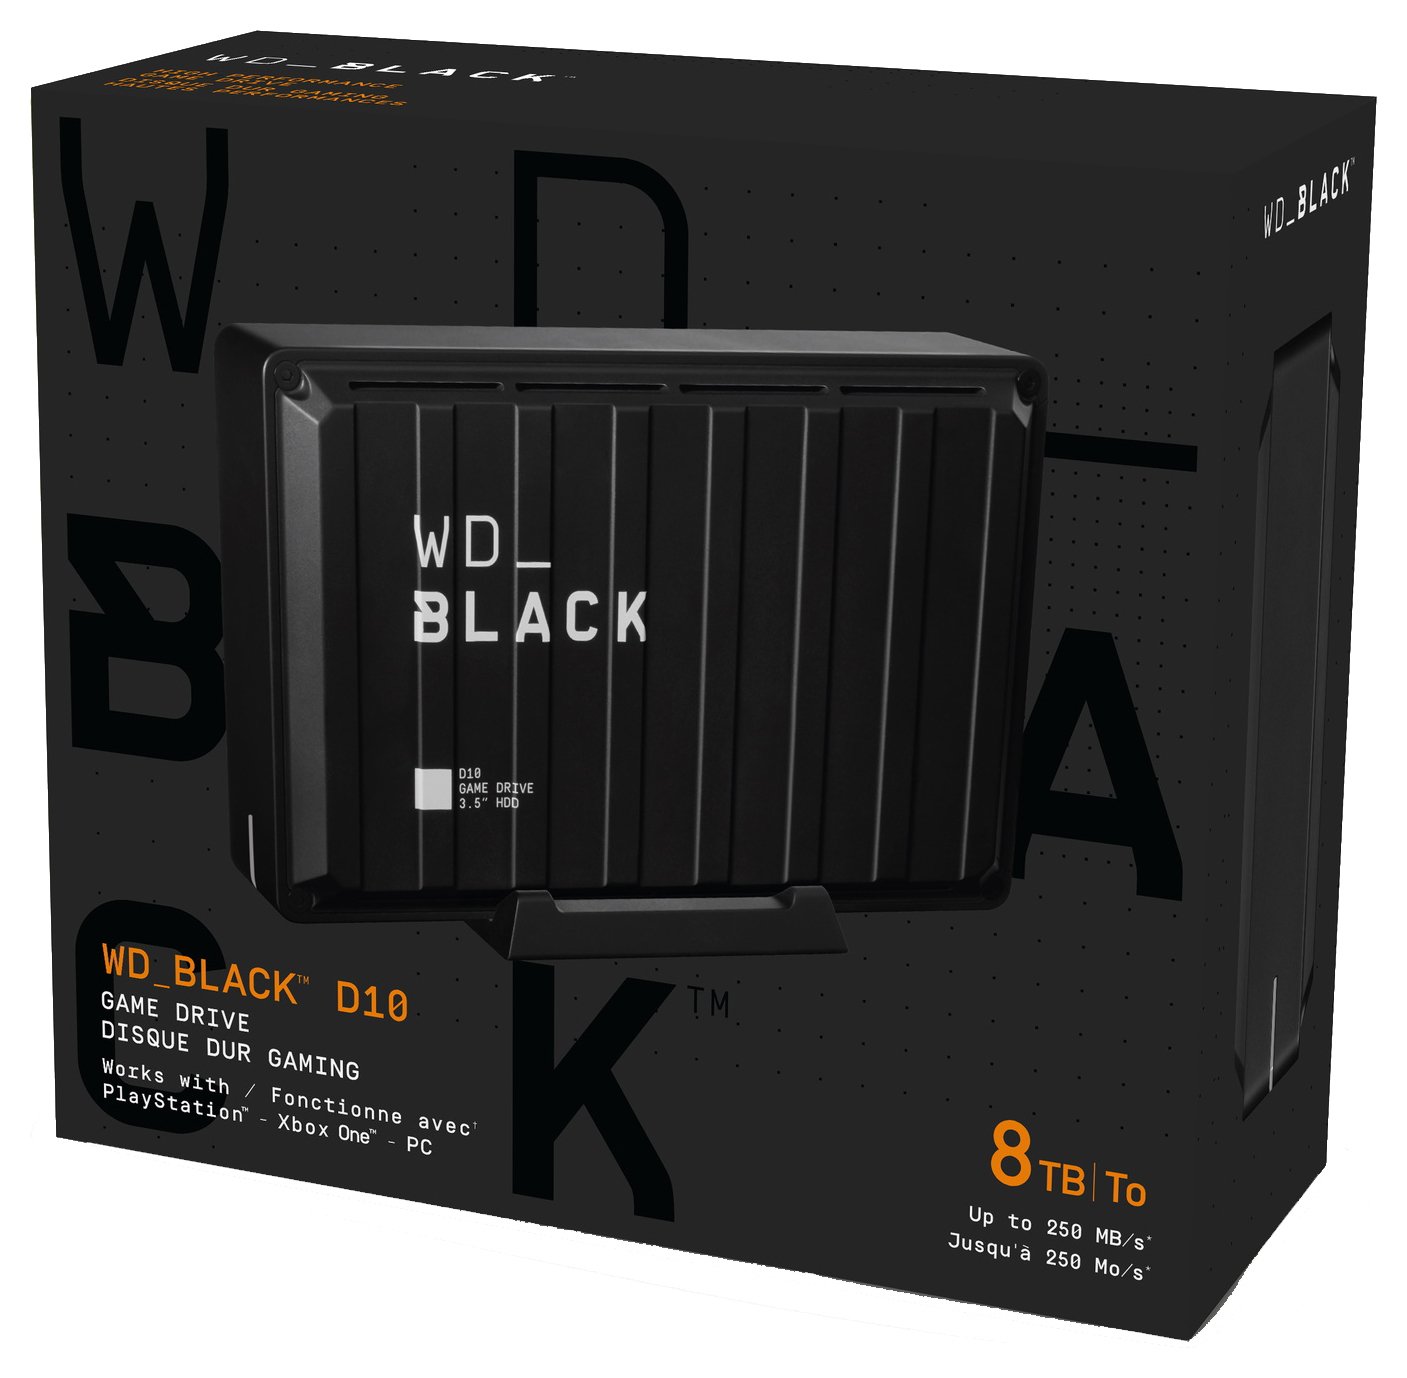 WD_BLACK D10 8TB External Gaming Hard Drive